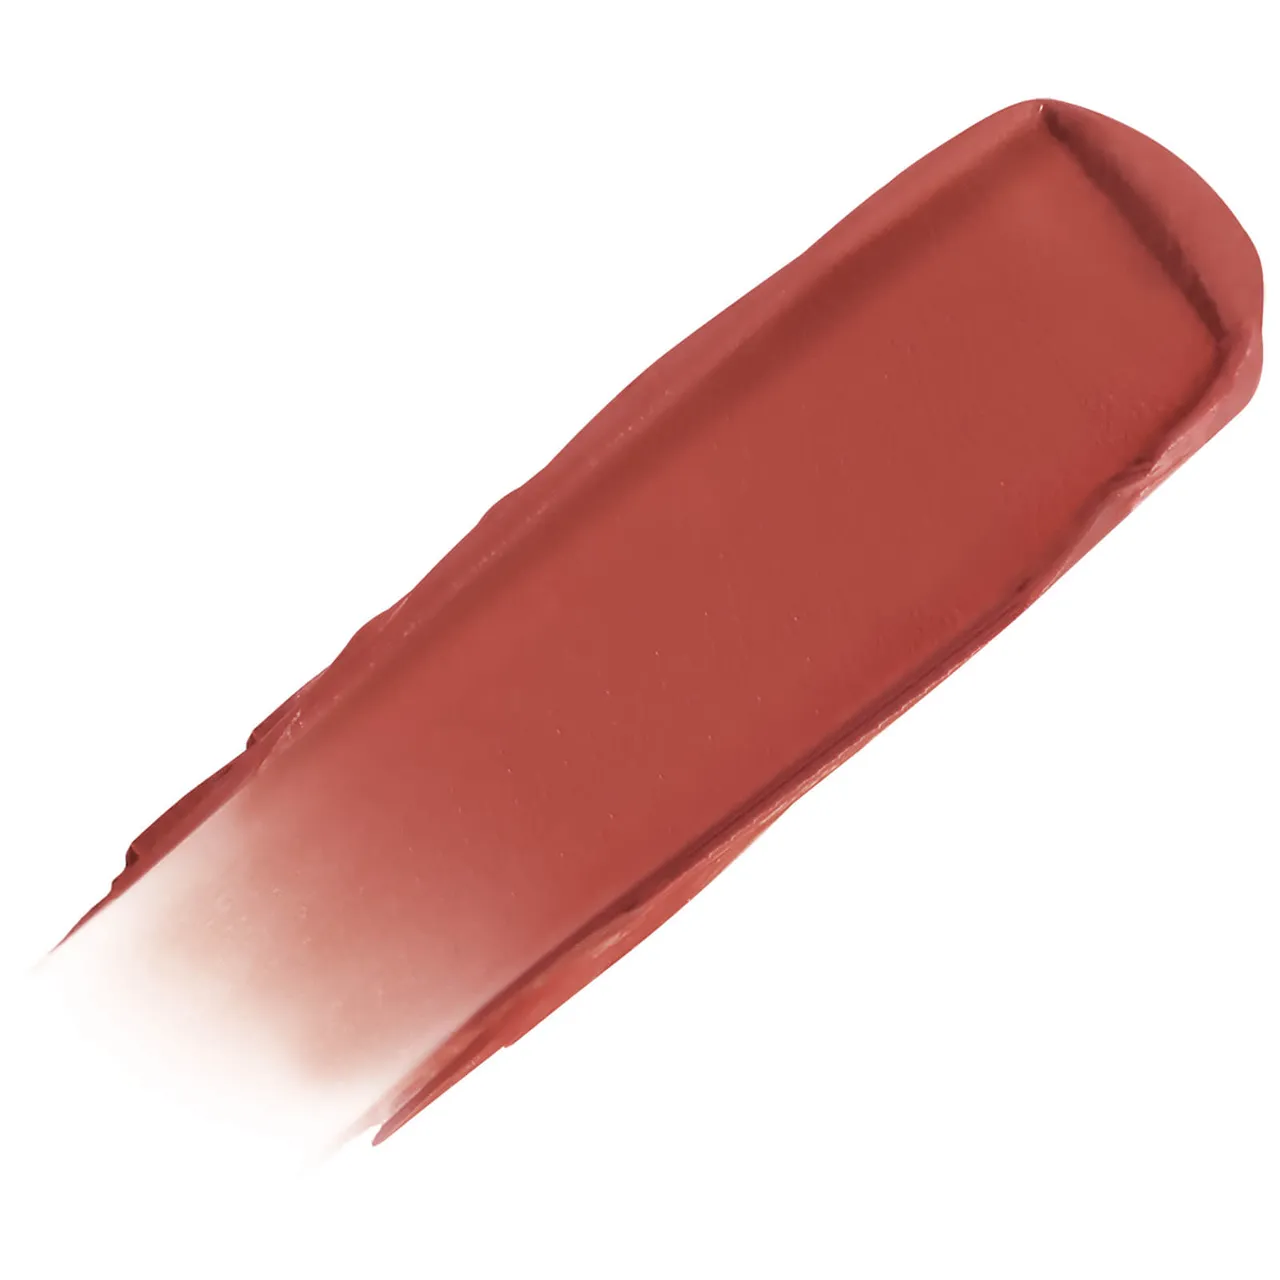 Lancôme L'Absolu Rouge Intimatte Lipstick 3.4ml (Various Shades) - 274 French Tea